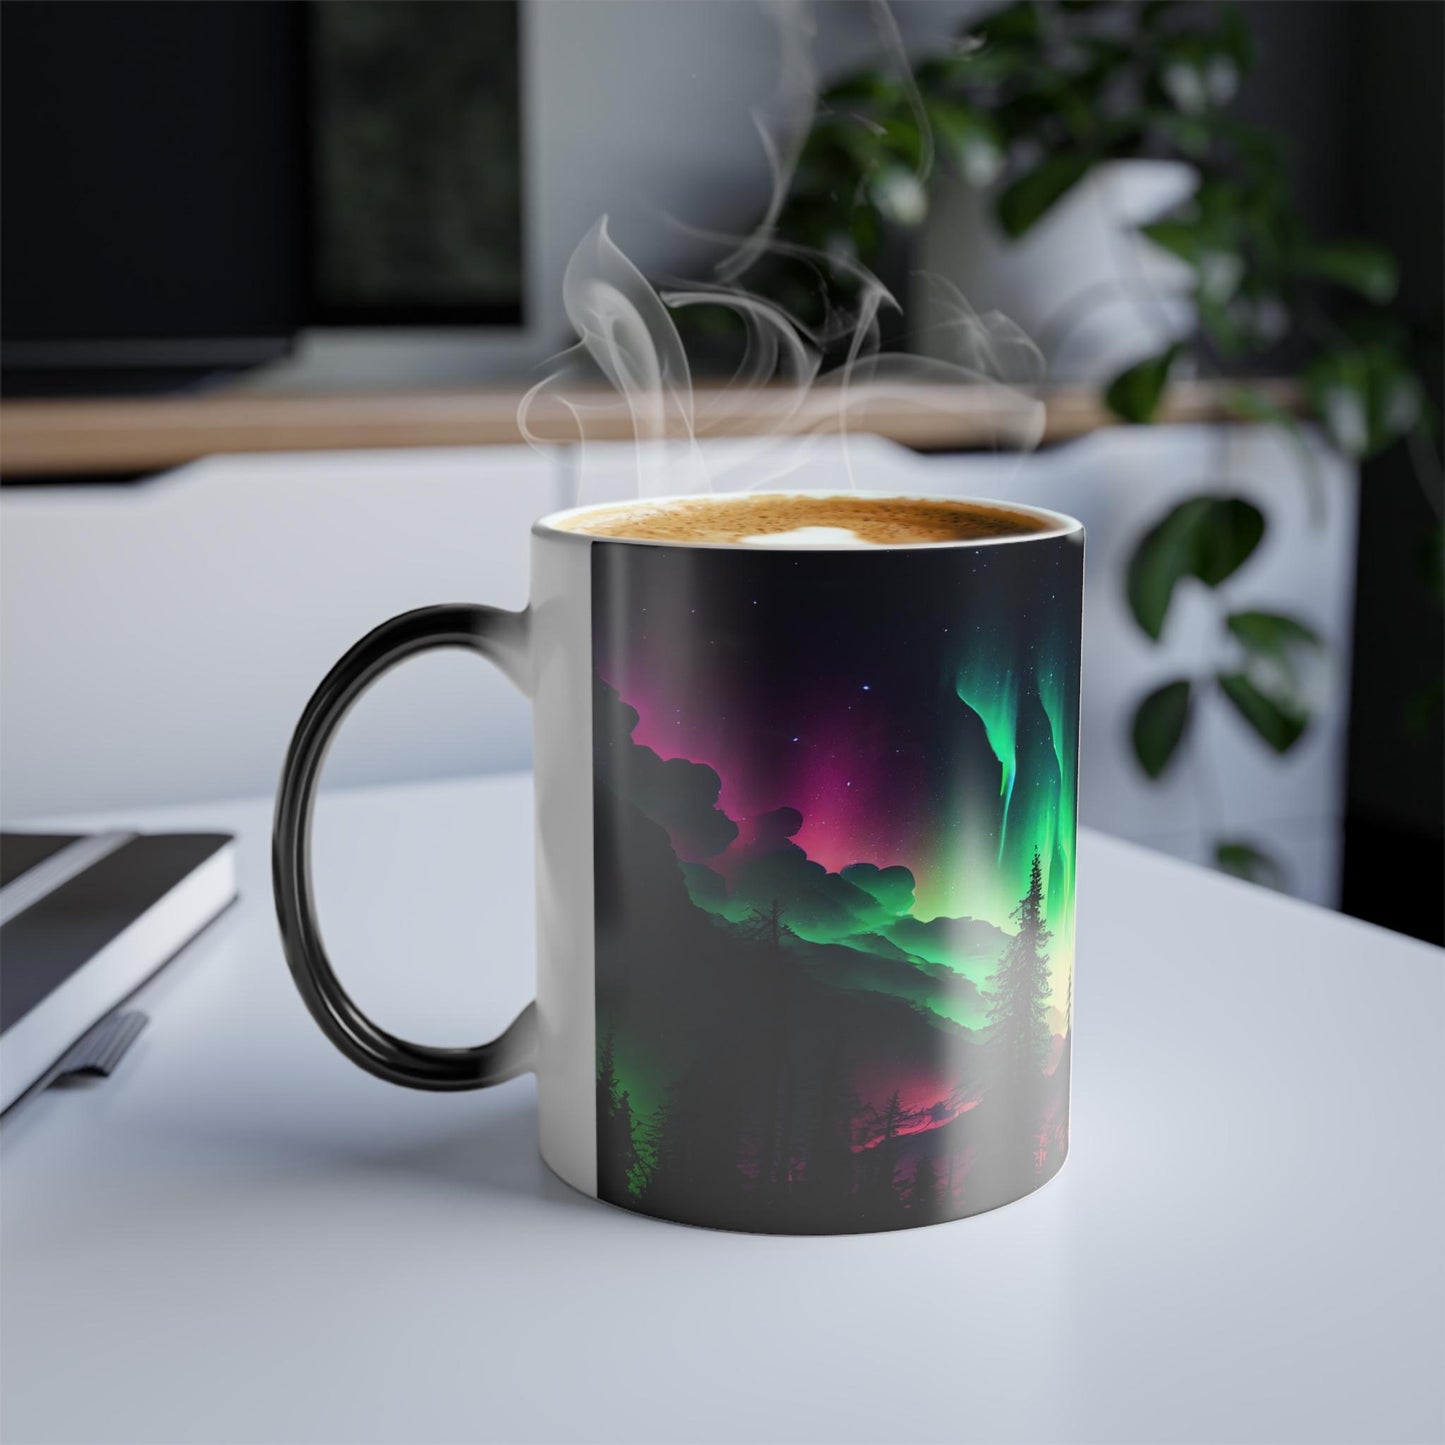 Enchanting Aurora Borealis Heat Sensitive Mug - Northern Lights Magic Color Morphing Mug 11oz - Heat Reactive Night Sky Coffee Cup - Perfect Gift for Nature Lovers 19